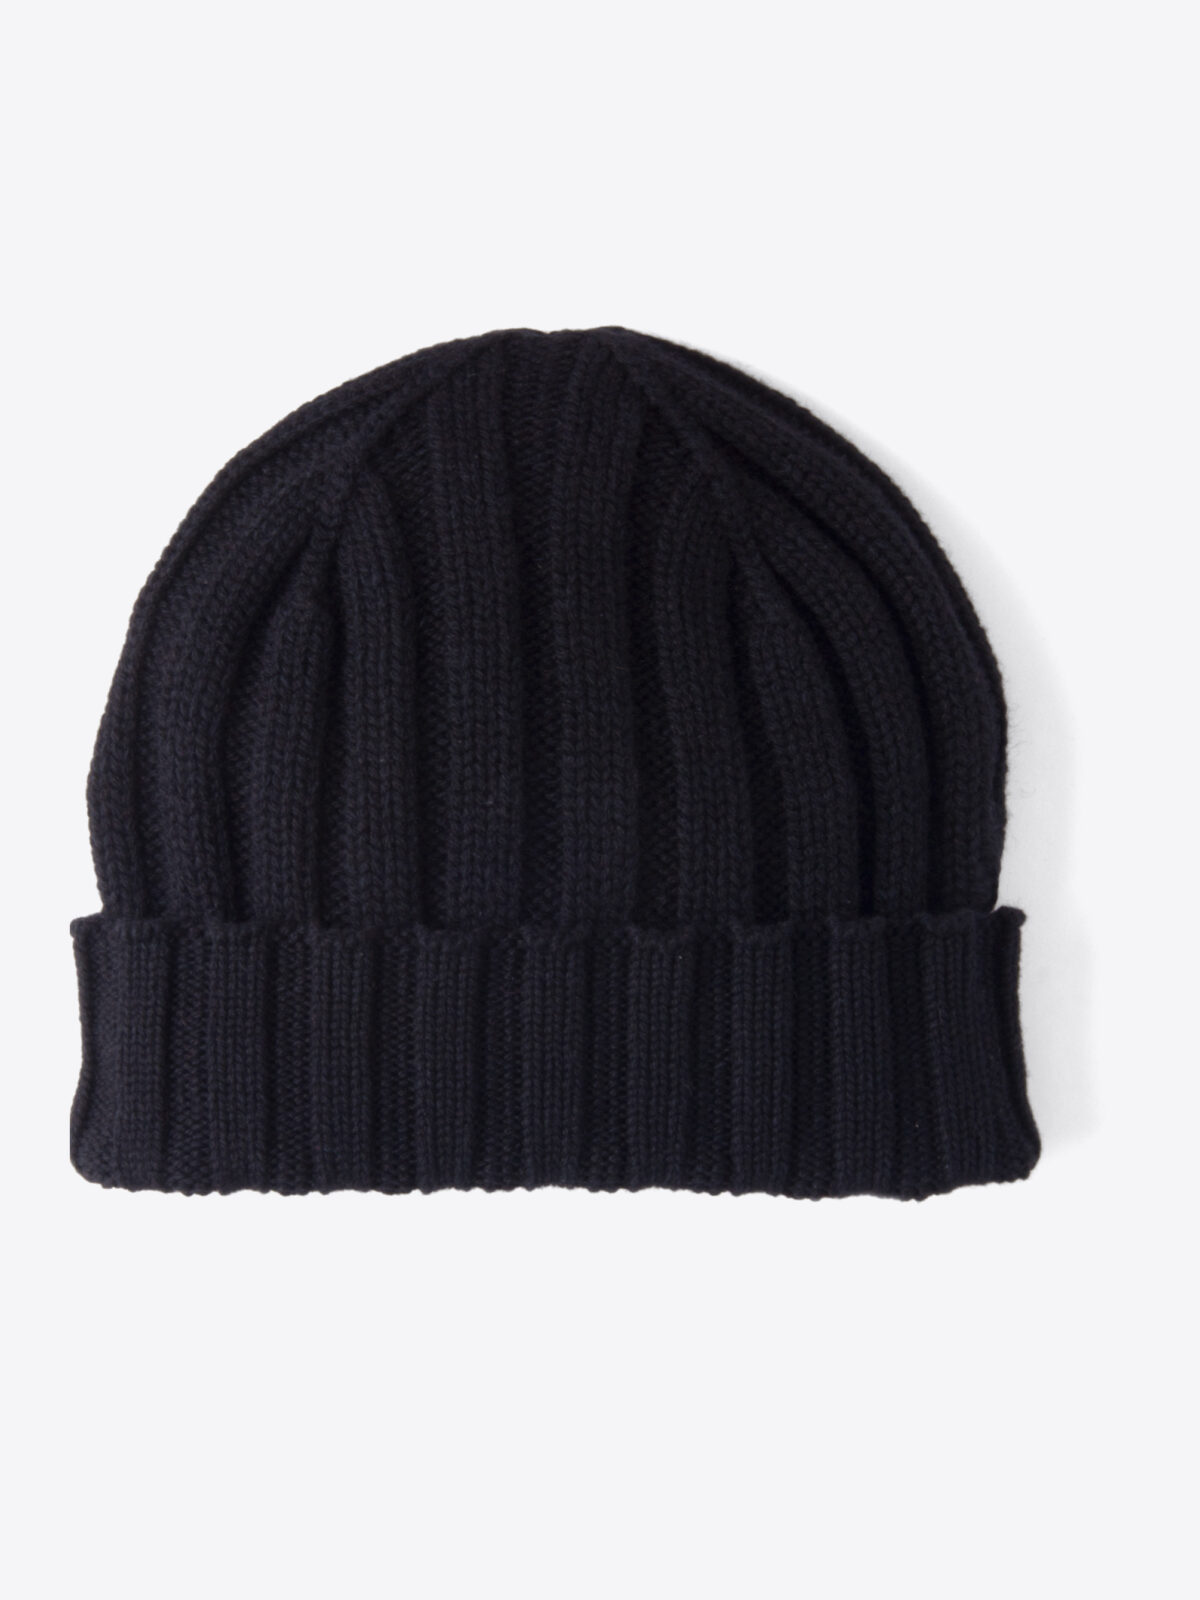 Black Cashmere Knit Hat